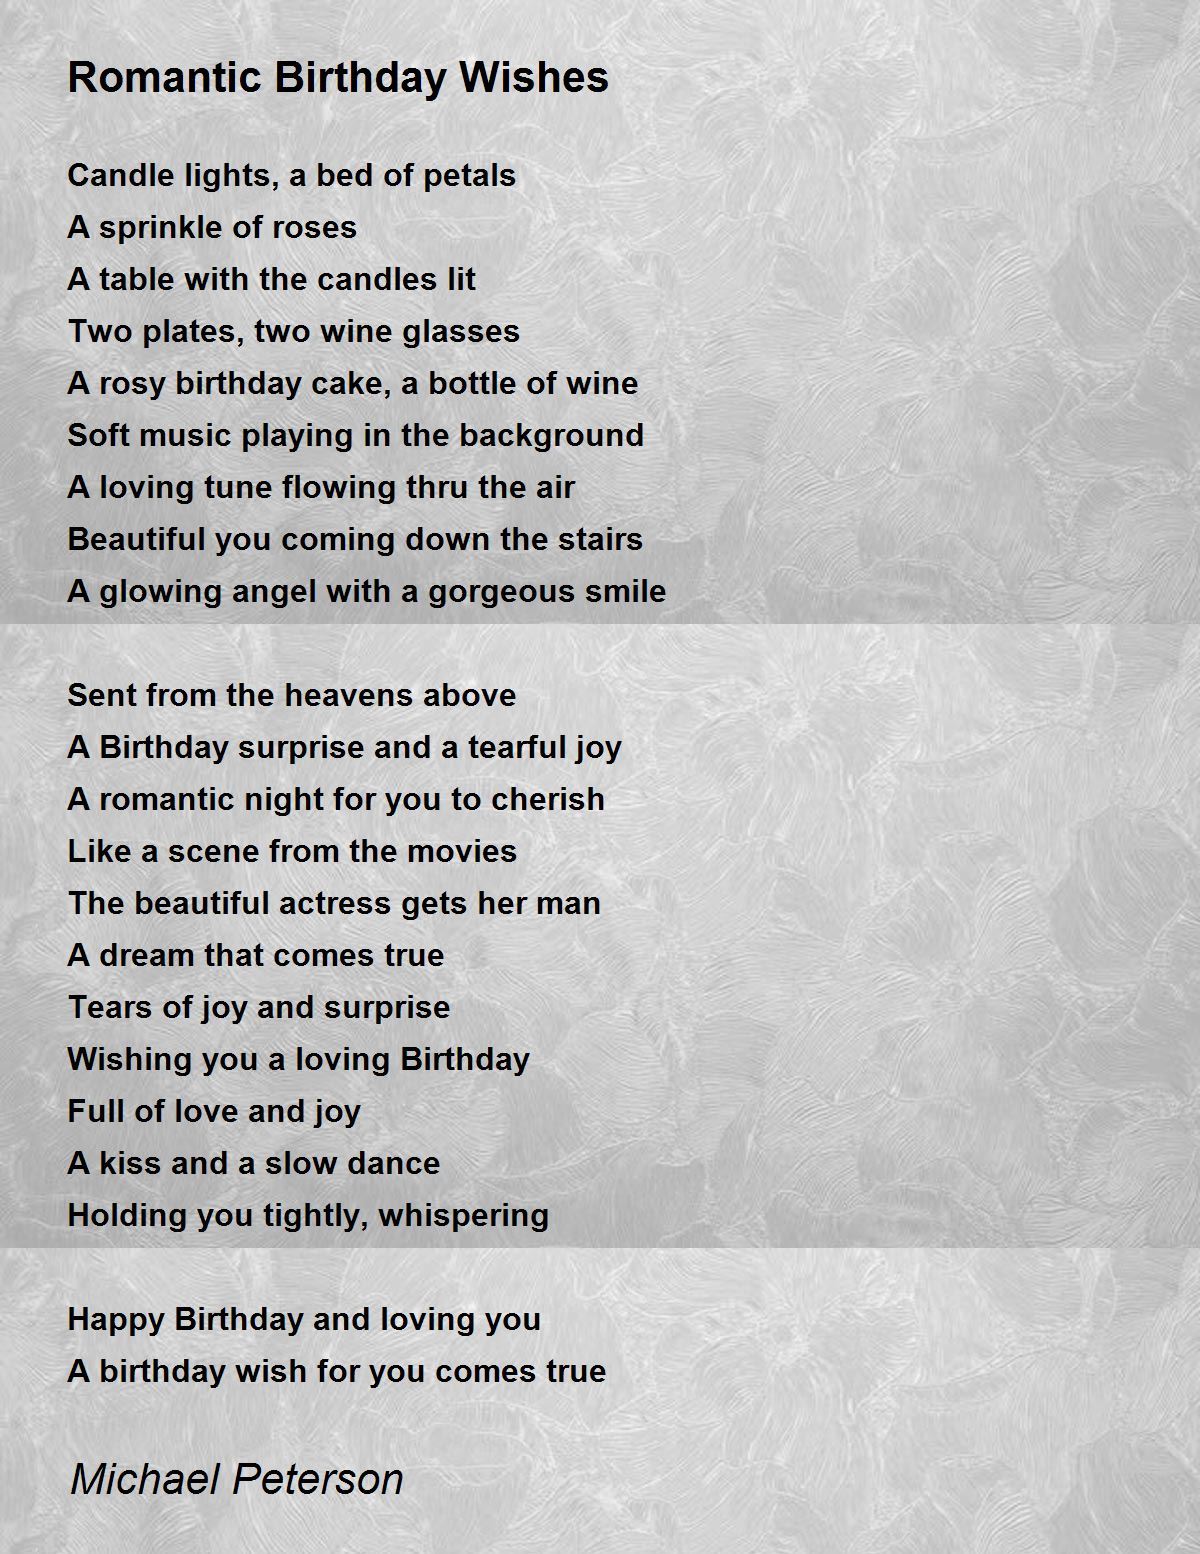 Romantic Birthday Wishes - Romantic Birthday Wishes Poem by ...